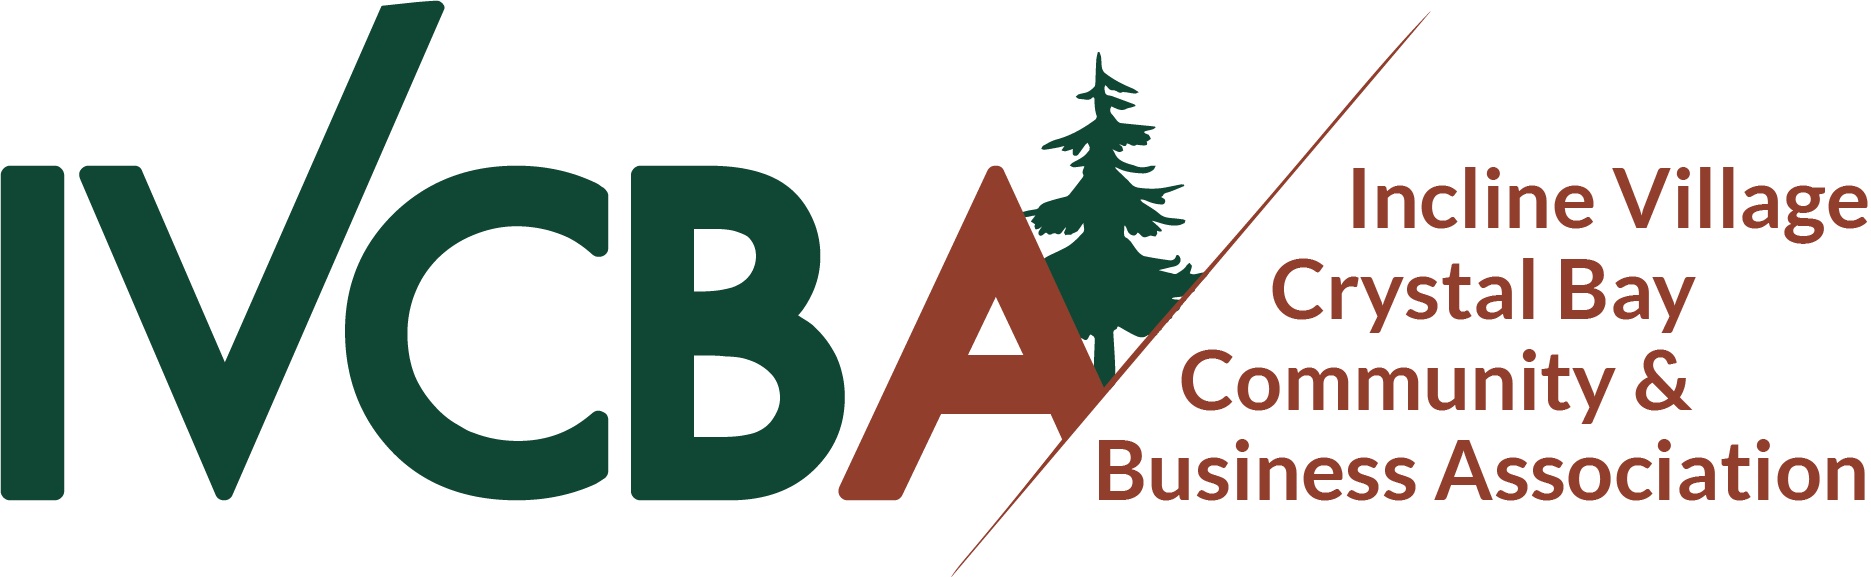 IVCBA Incline Village Crystal Bay Community and Business Association logo